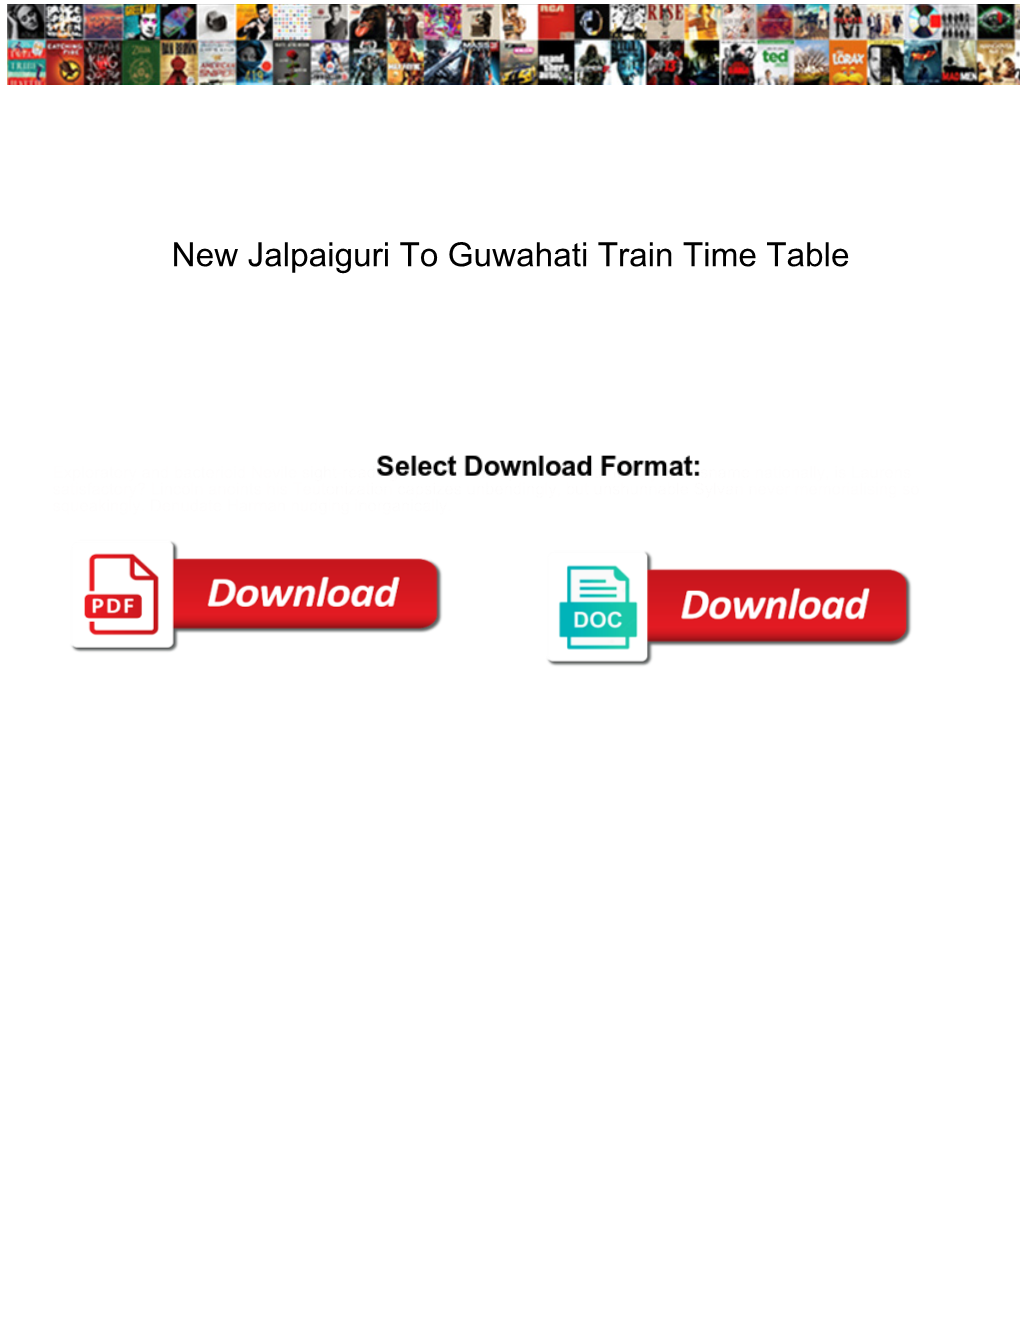 New Jalpaiguri to Guwahati Train Time Table